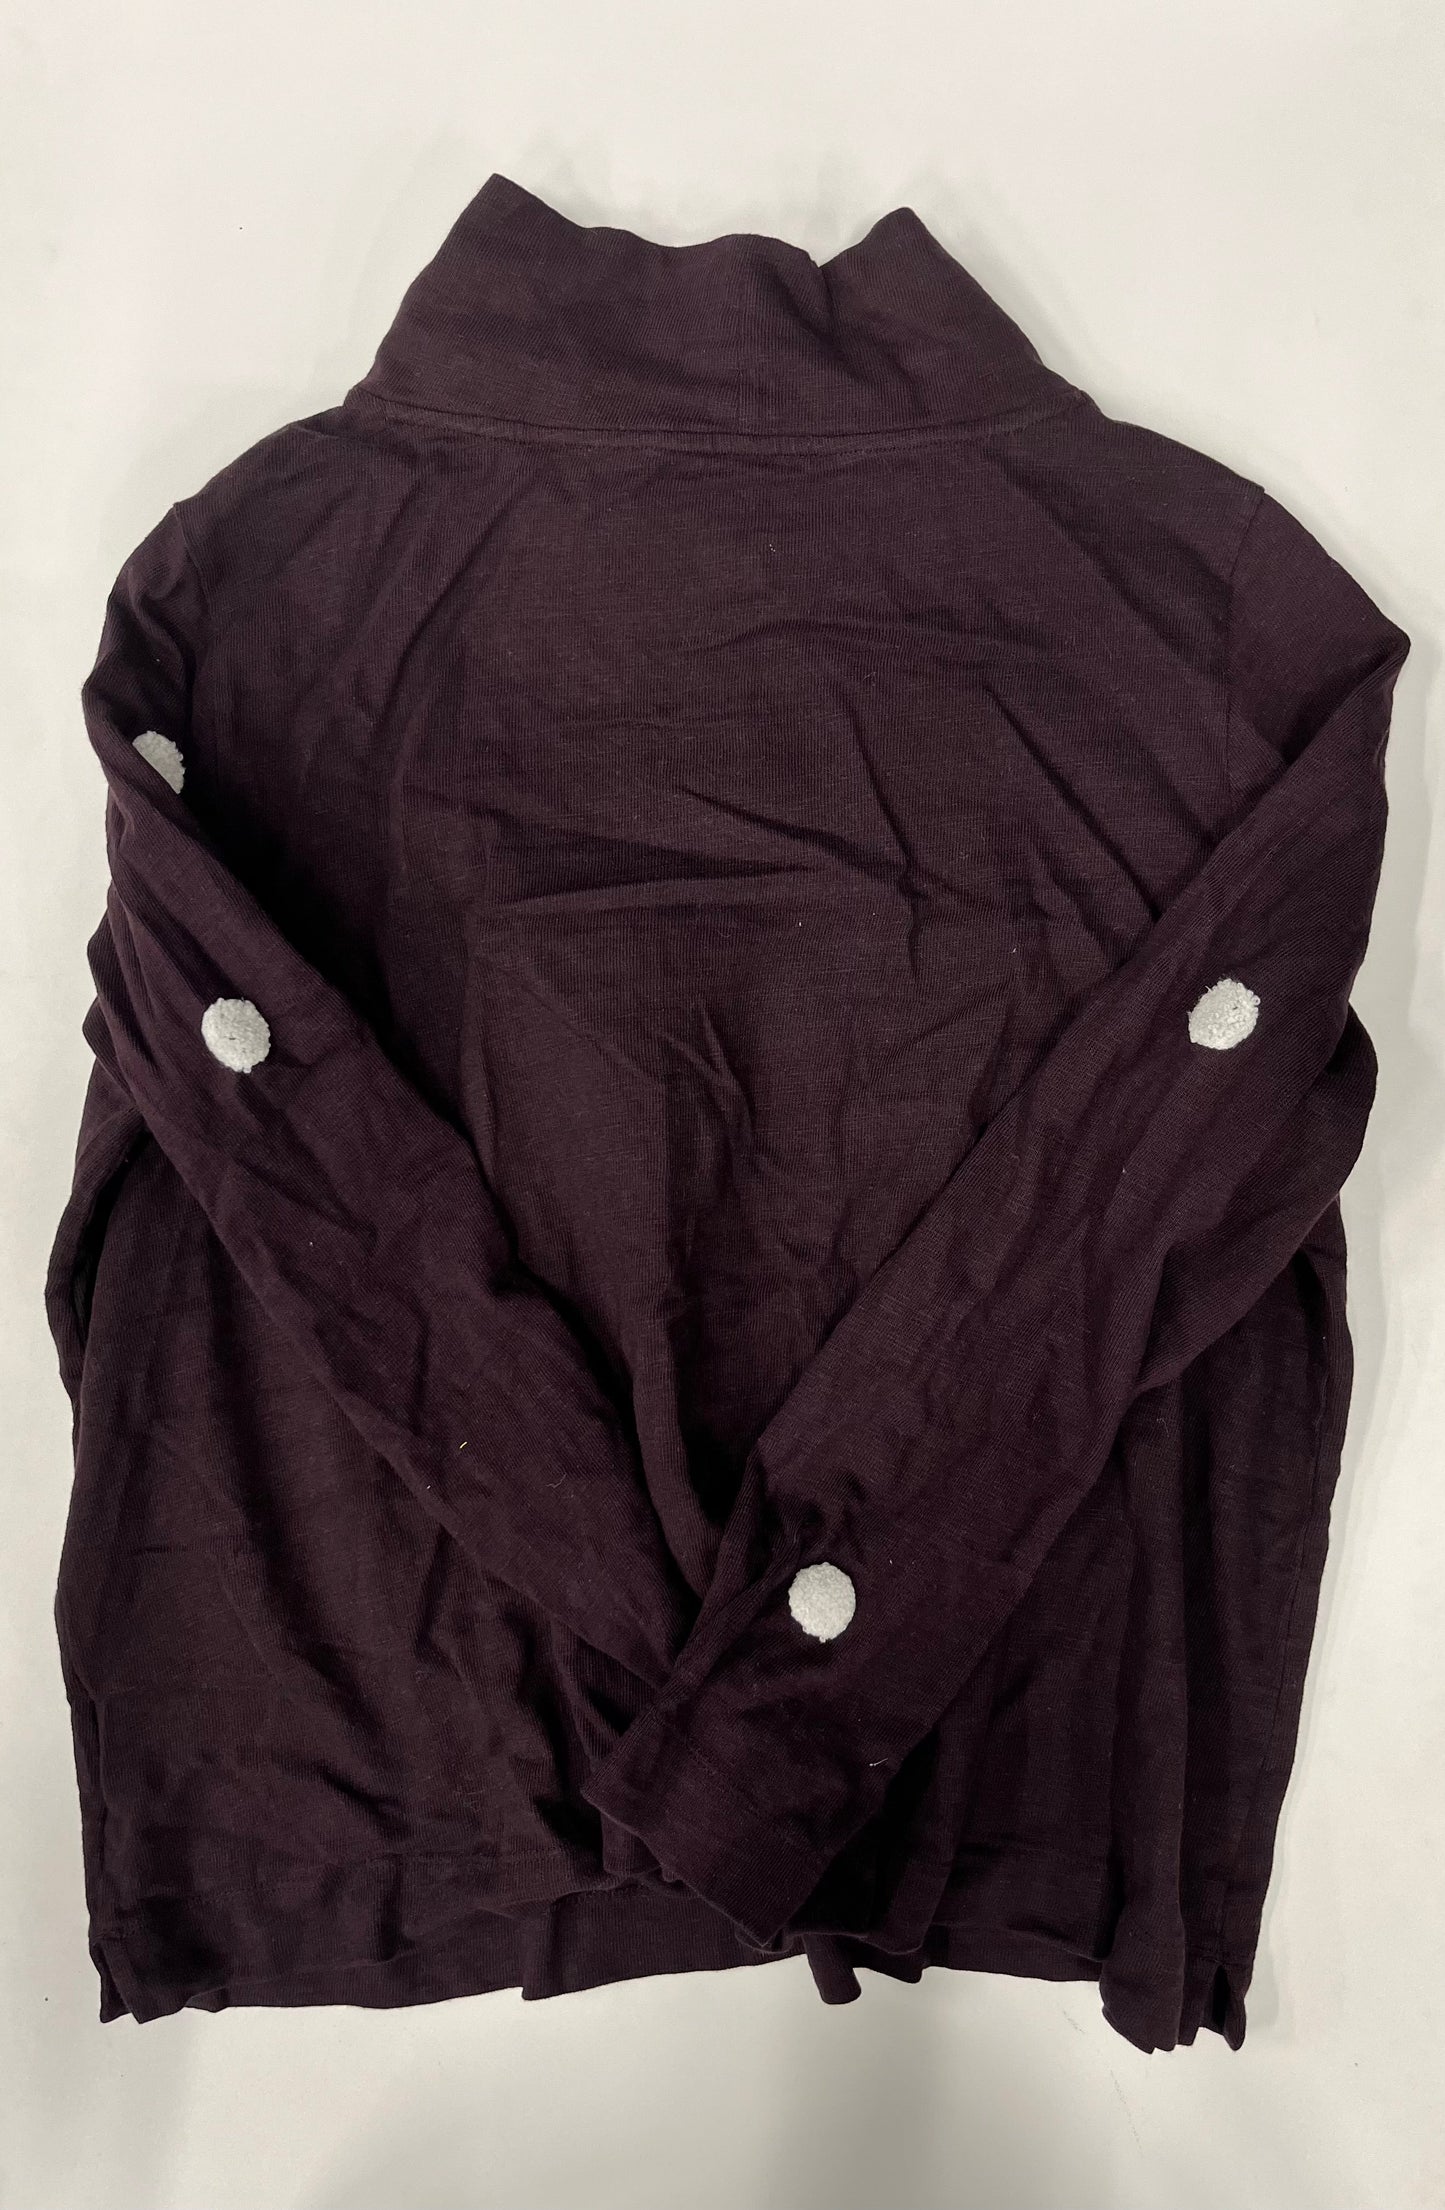 Sweatshirt Hoodie By Ann Taylor Loft  Size: 2x